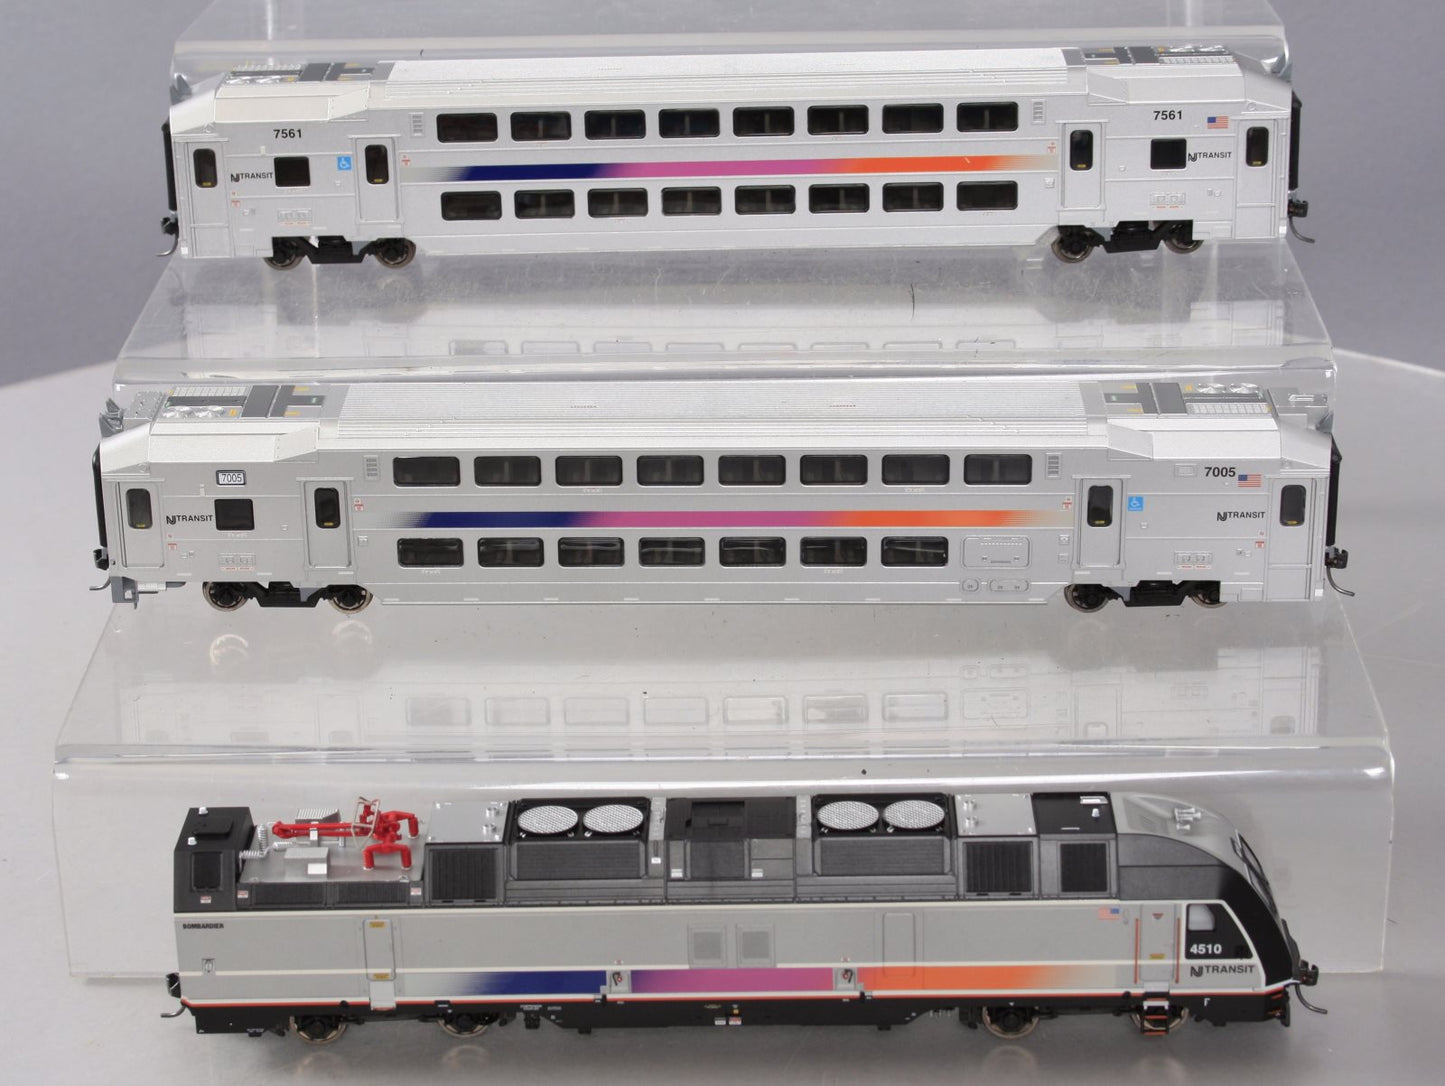 Atlas 80000000 New Jersey Transit Modern HO Gauge Commuter Train Set